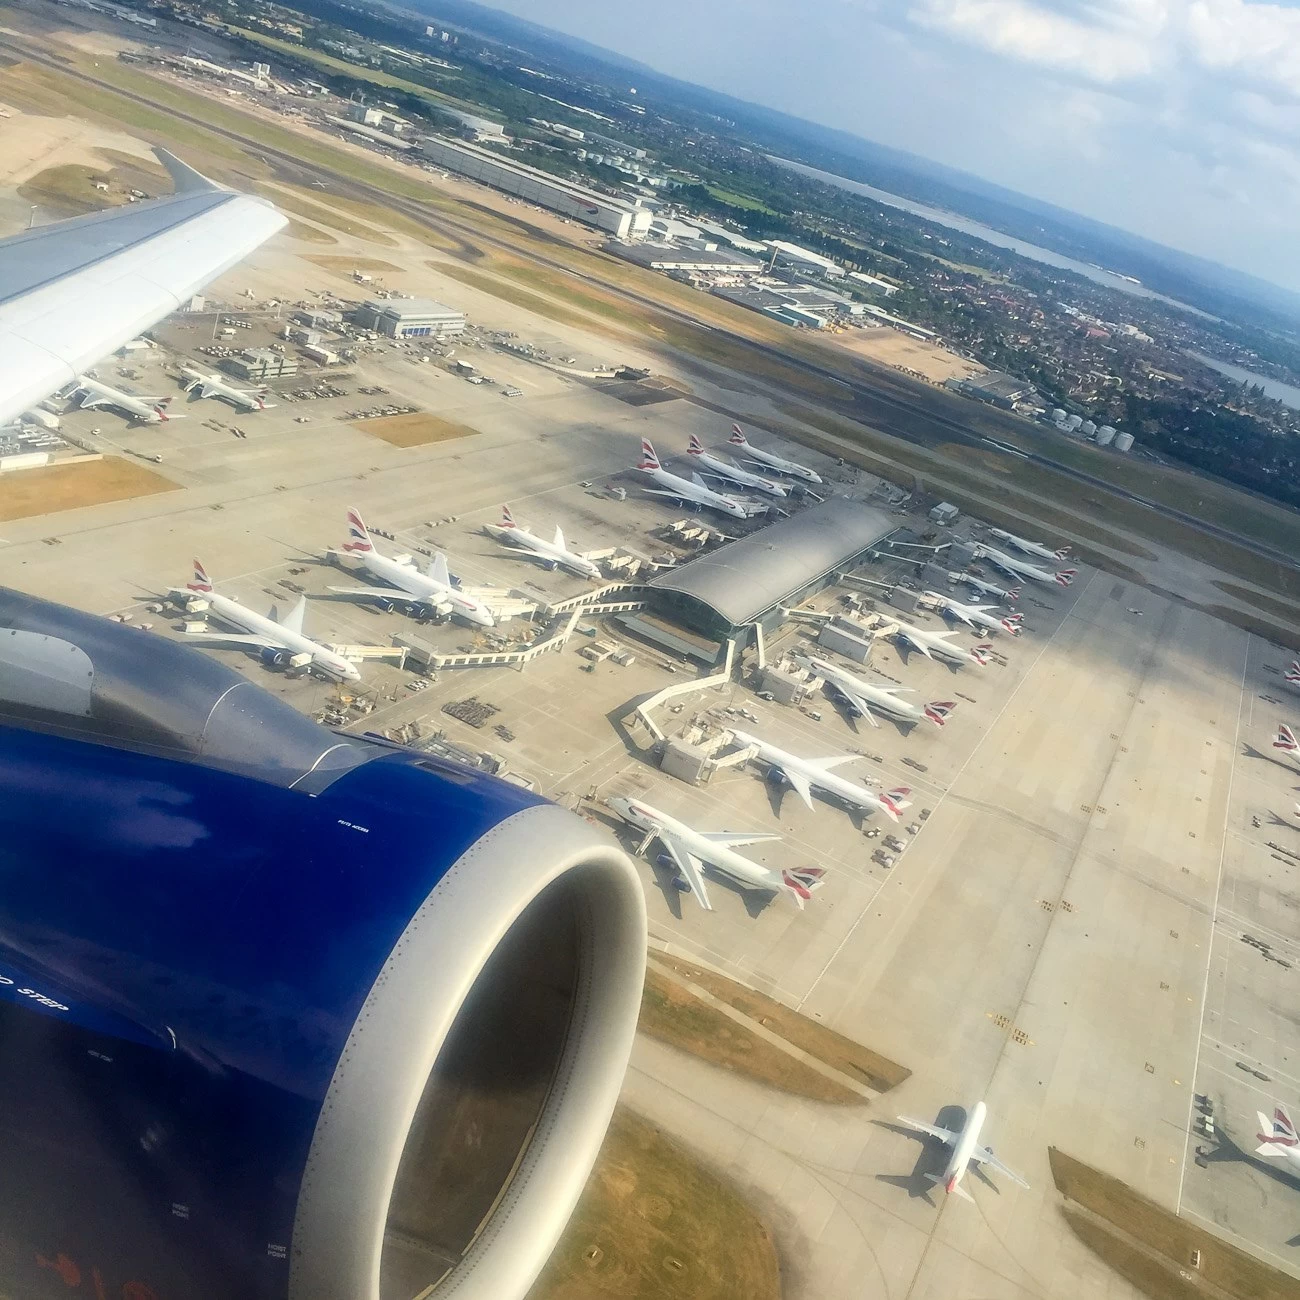 A British Airways flight to Paris on take-off from Heathrow Airport